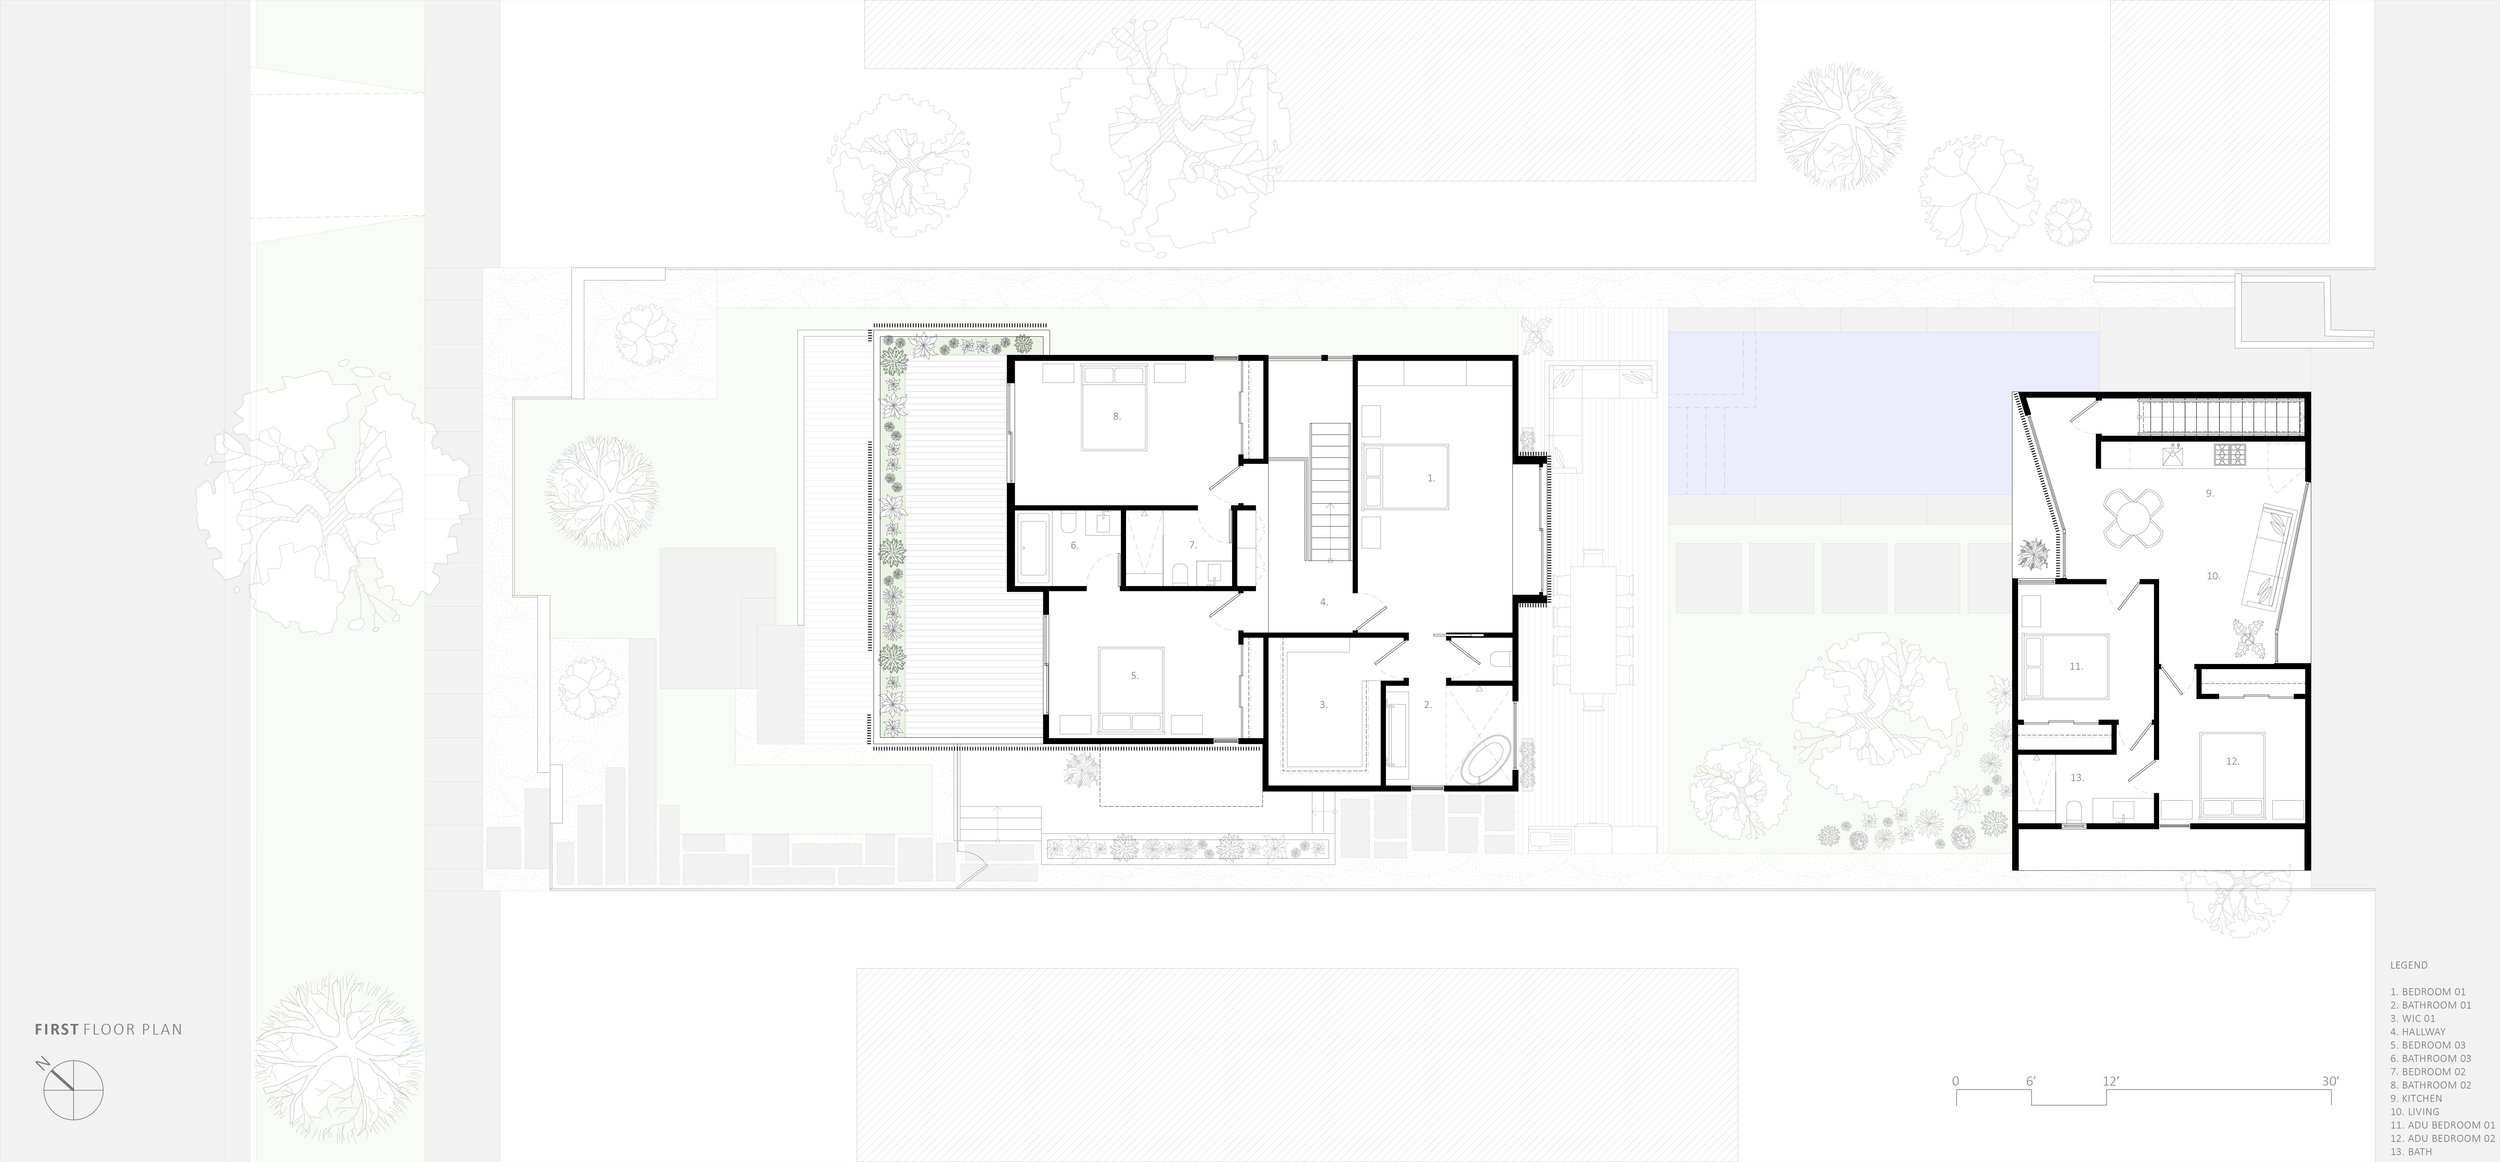 bspk-design-architecture-california-4100-residenital-cnb-house-first level floor plan.jpg